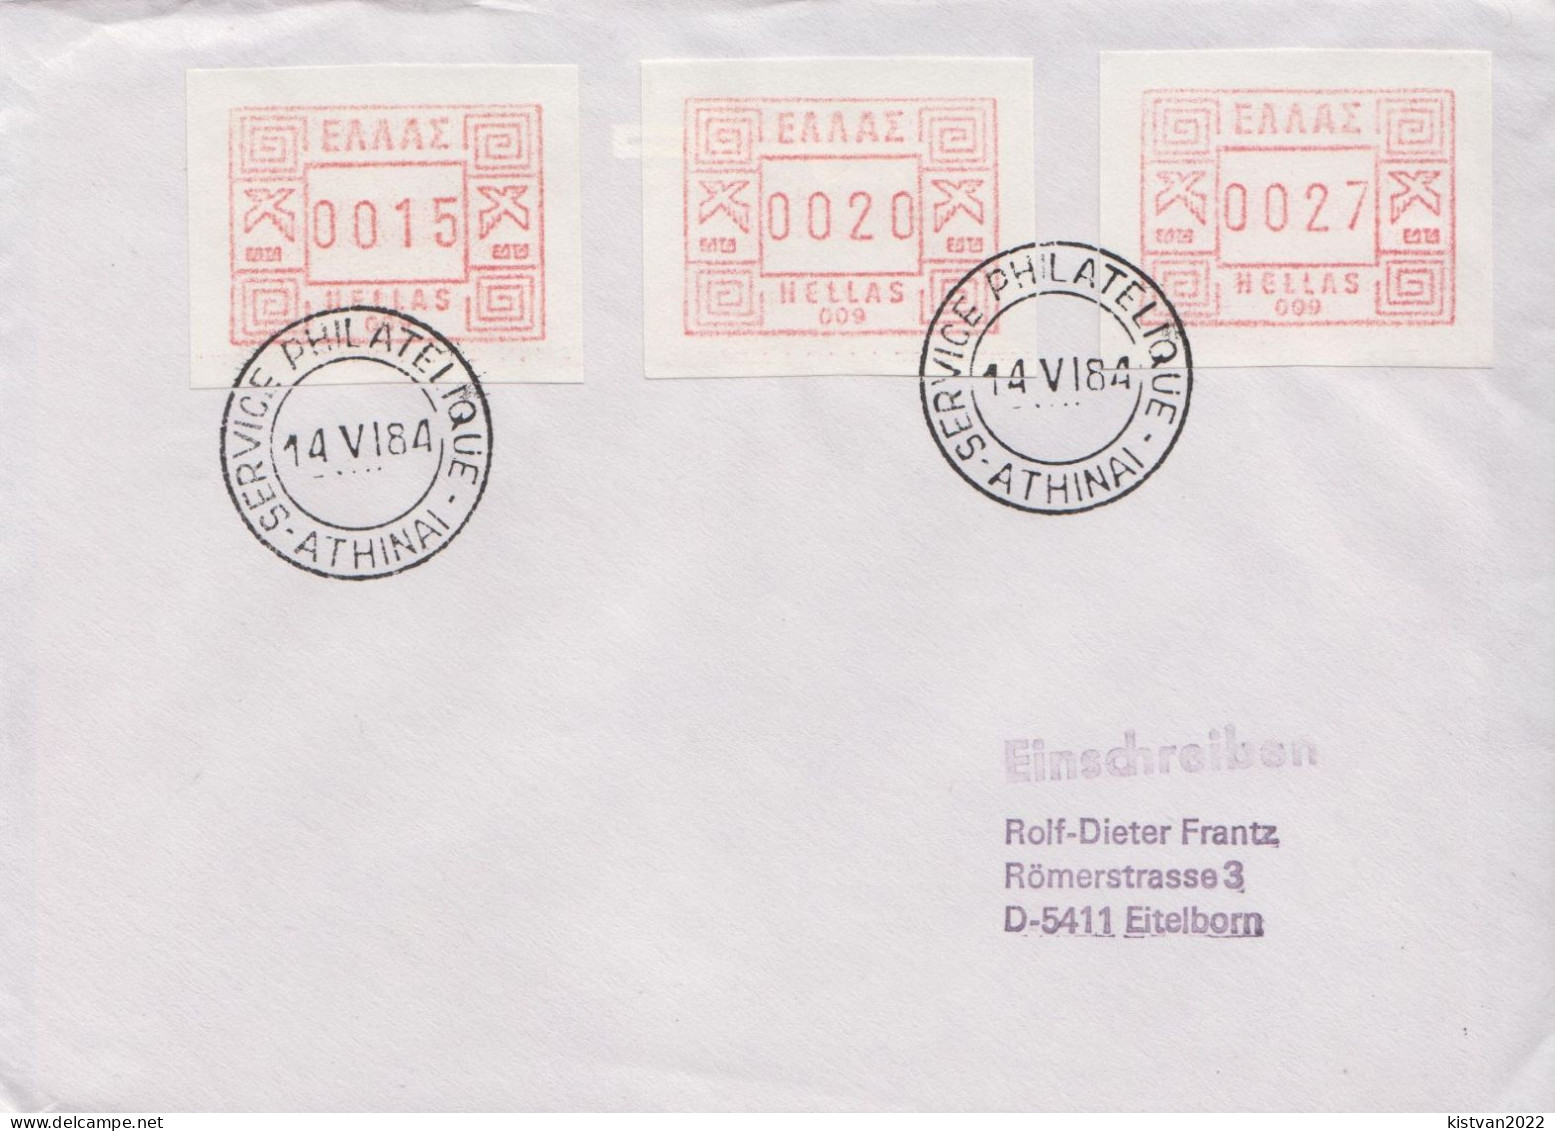 Postal History Cover: Greece Cover With Automat Stamps - Viñetas De Franqueo [ATM]